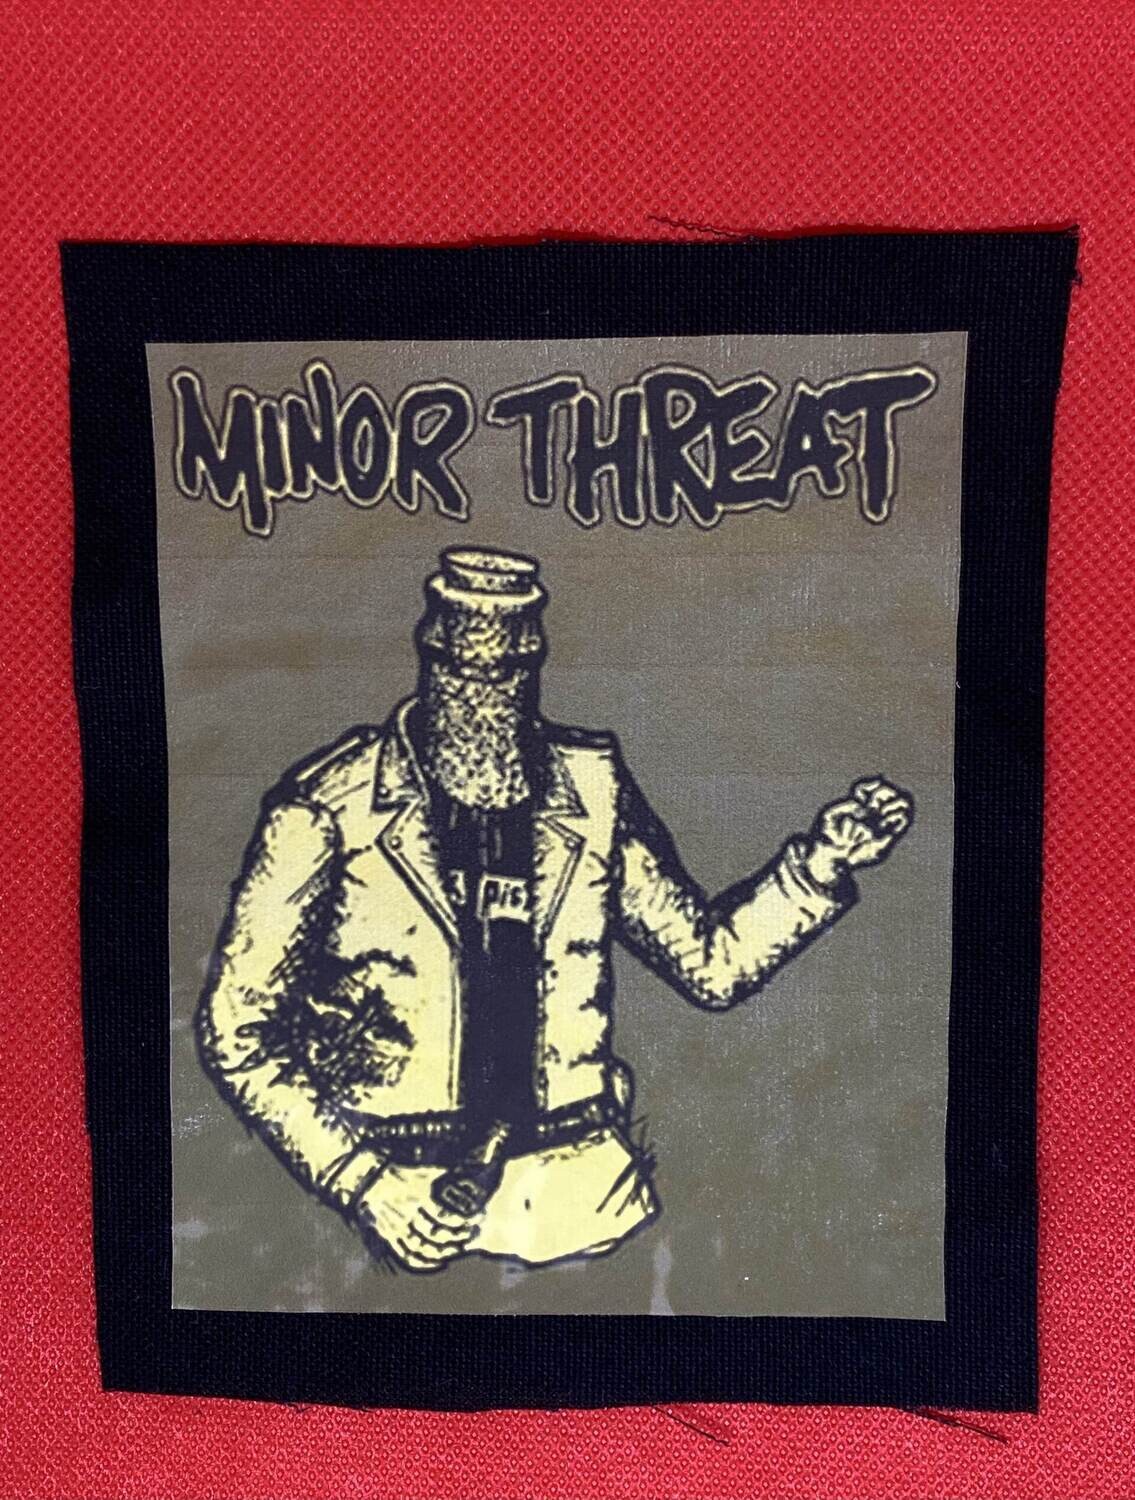 Minor Threat Patch